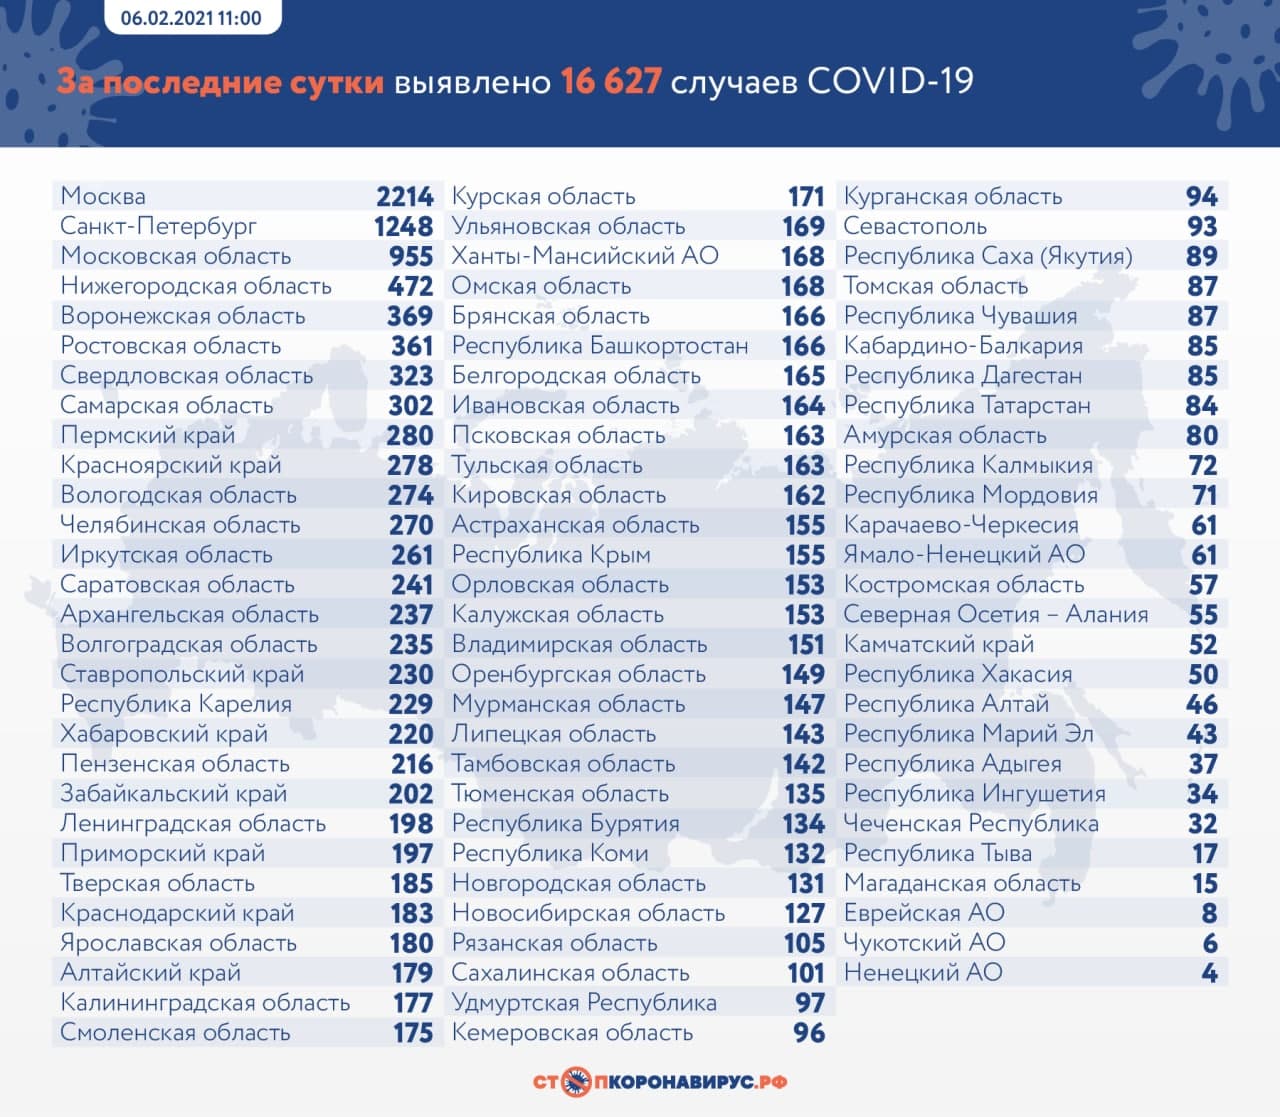 Оперативная статистика по коронавирусу в России на 9 февраля